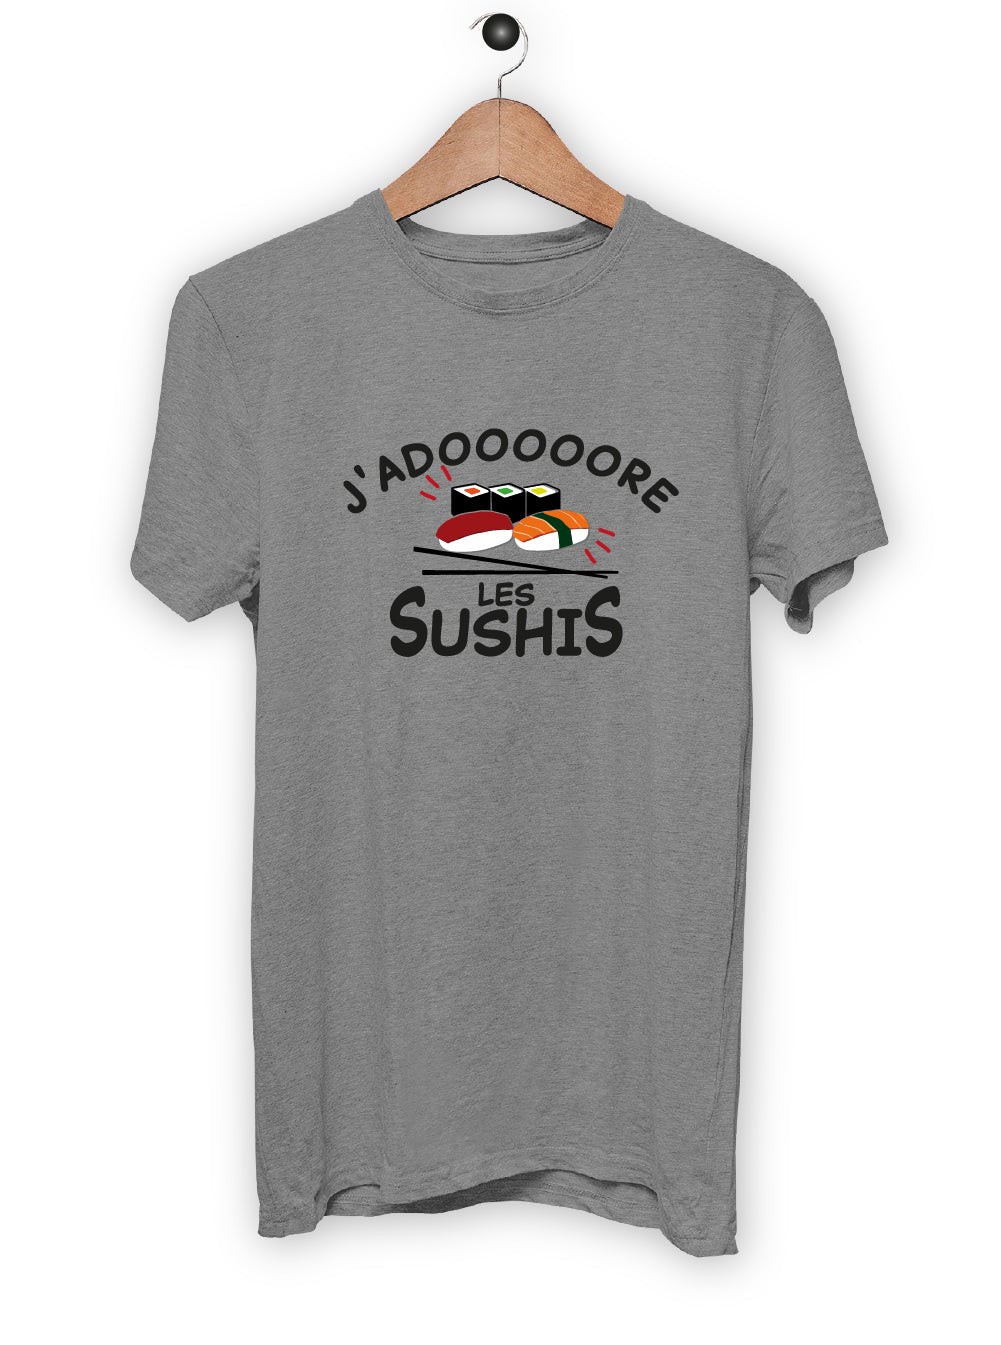 T-Shirt "J'ADOOOOORE LES SUSHIS"